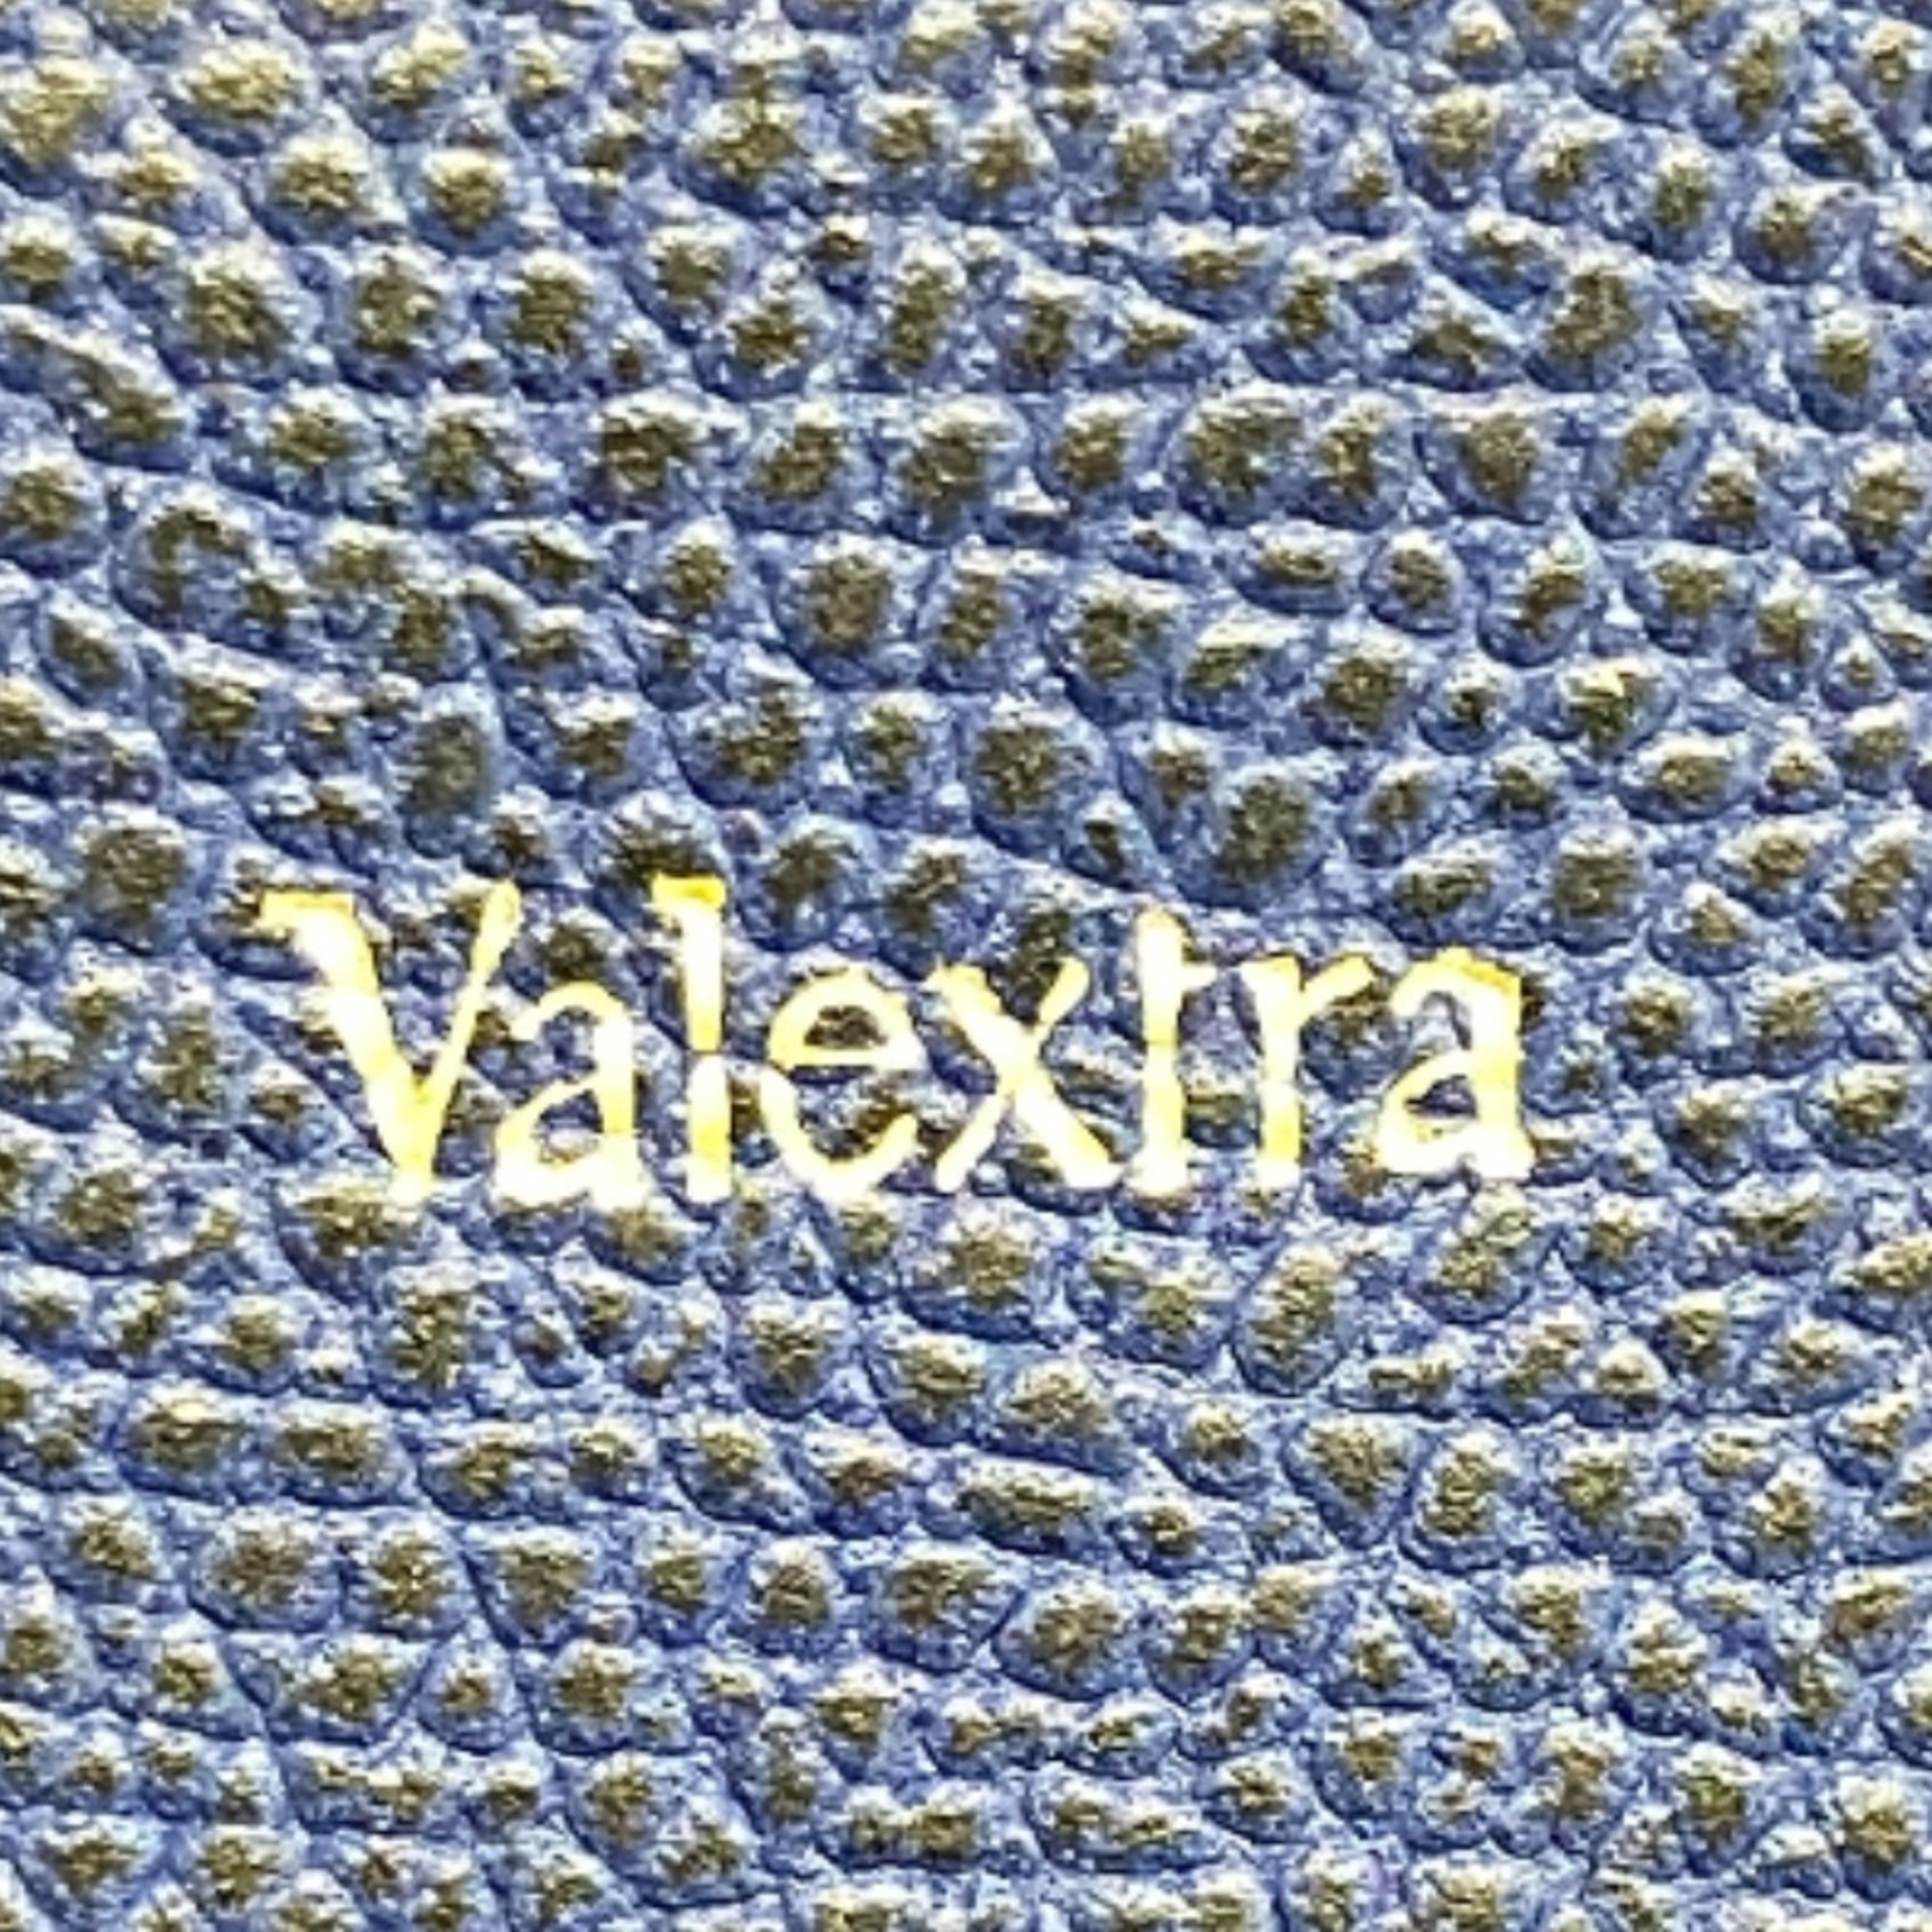 Valextra Iside clutch bag blue ladies Z0005406